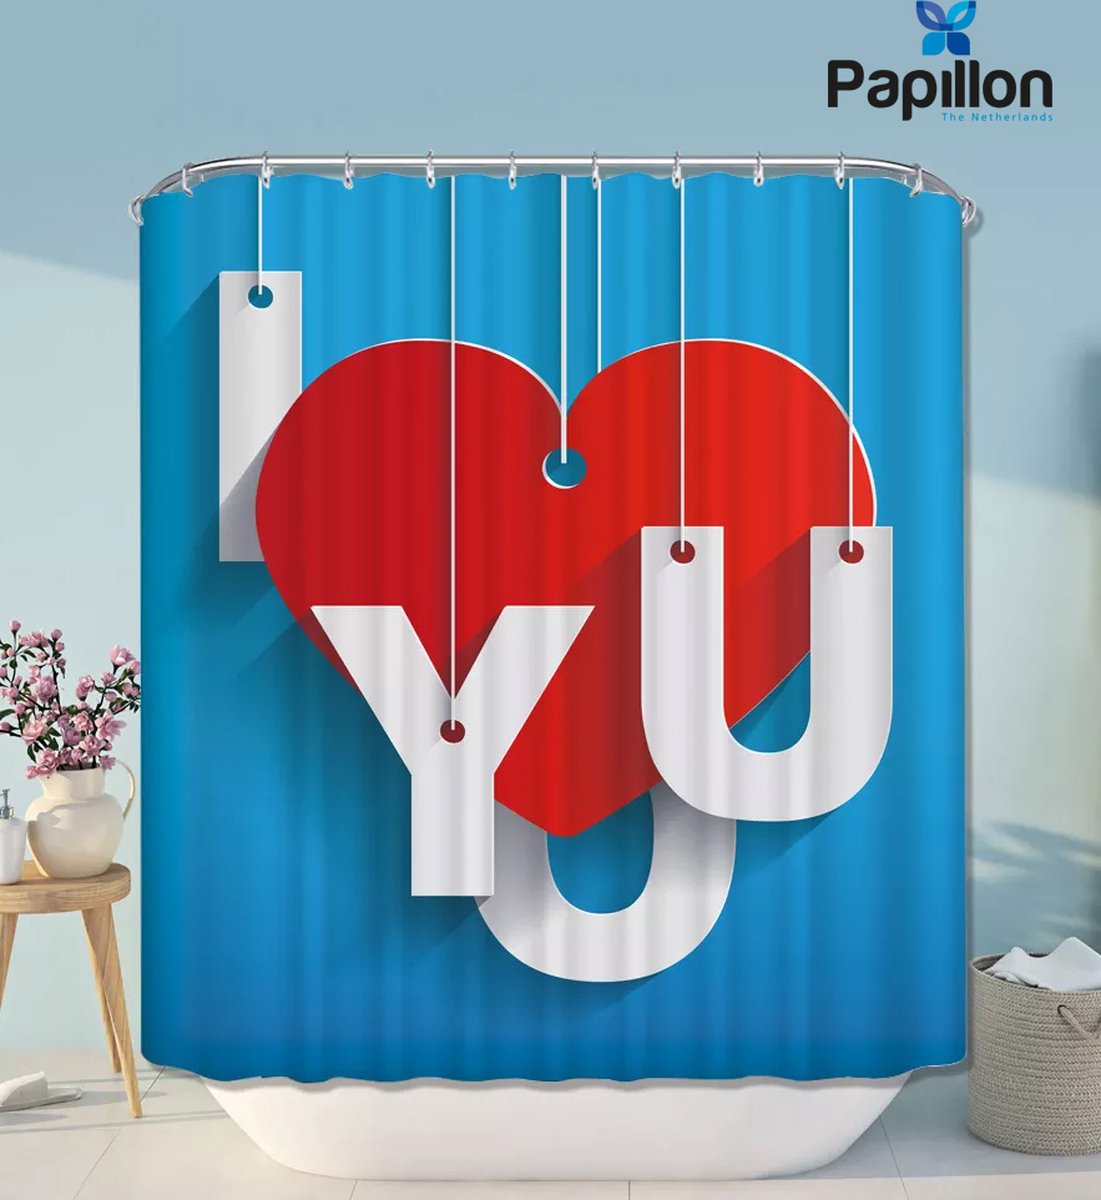 Papillon Douchegordijn - Textiel - Waterafstotend - 180x200 - Love